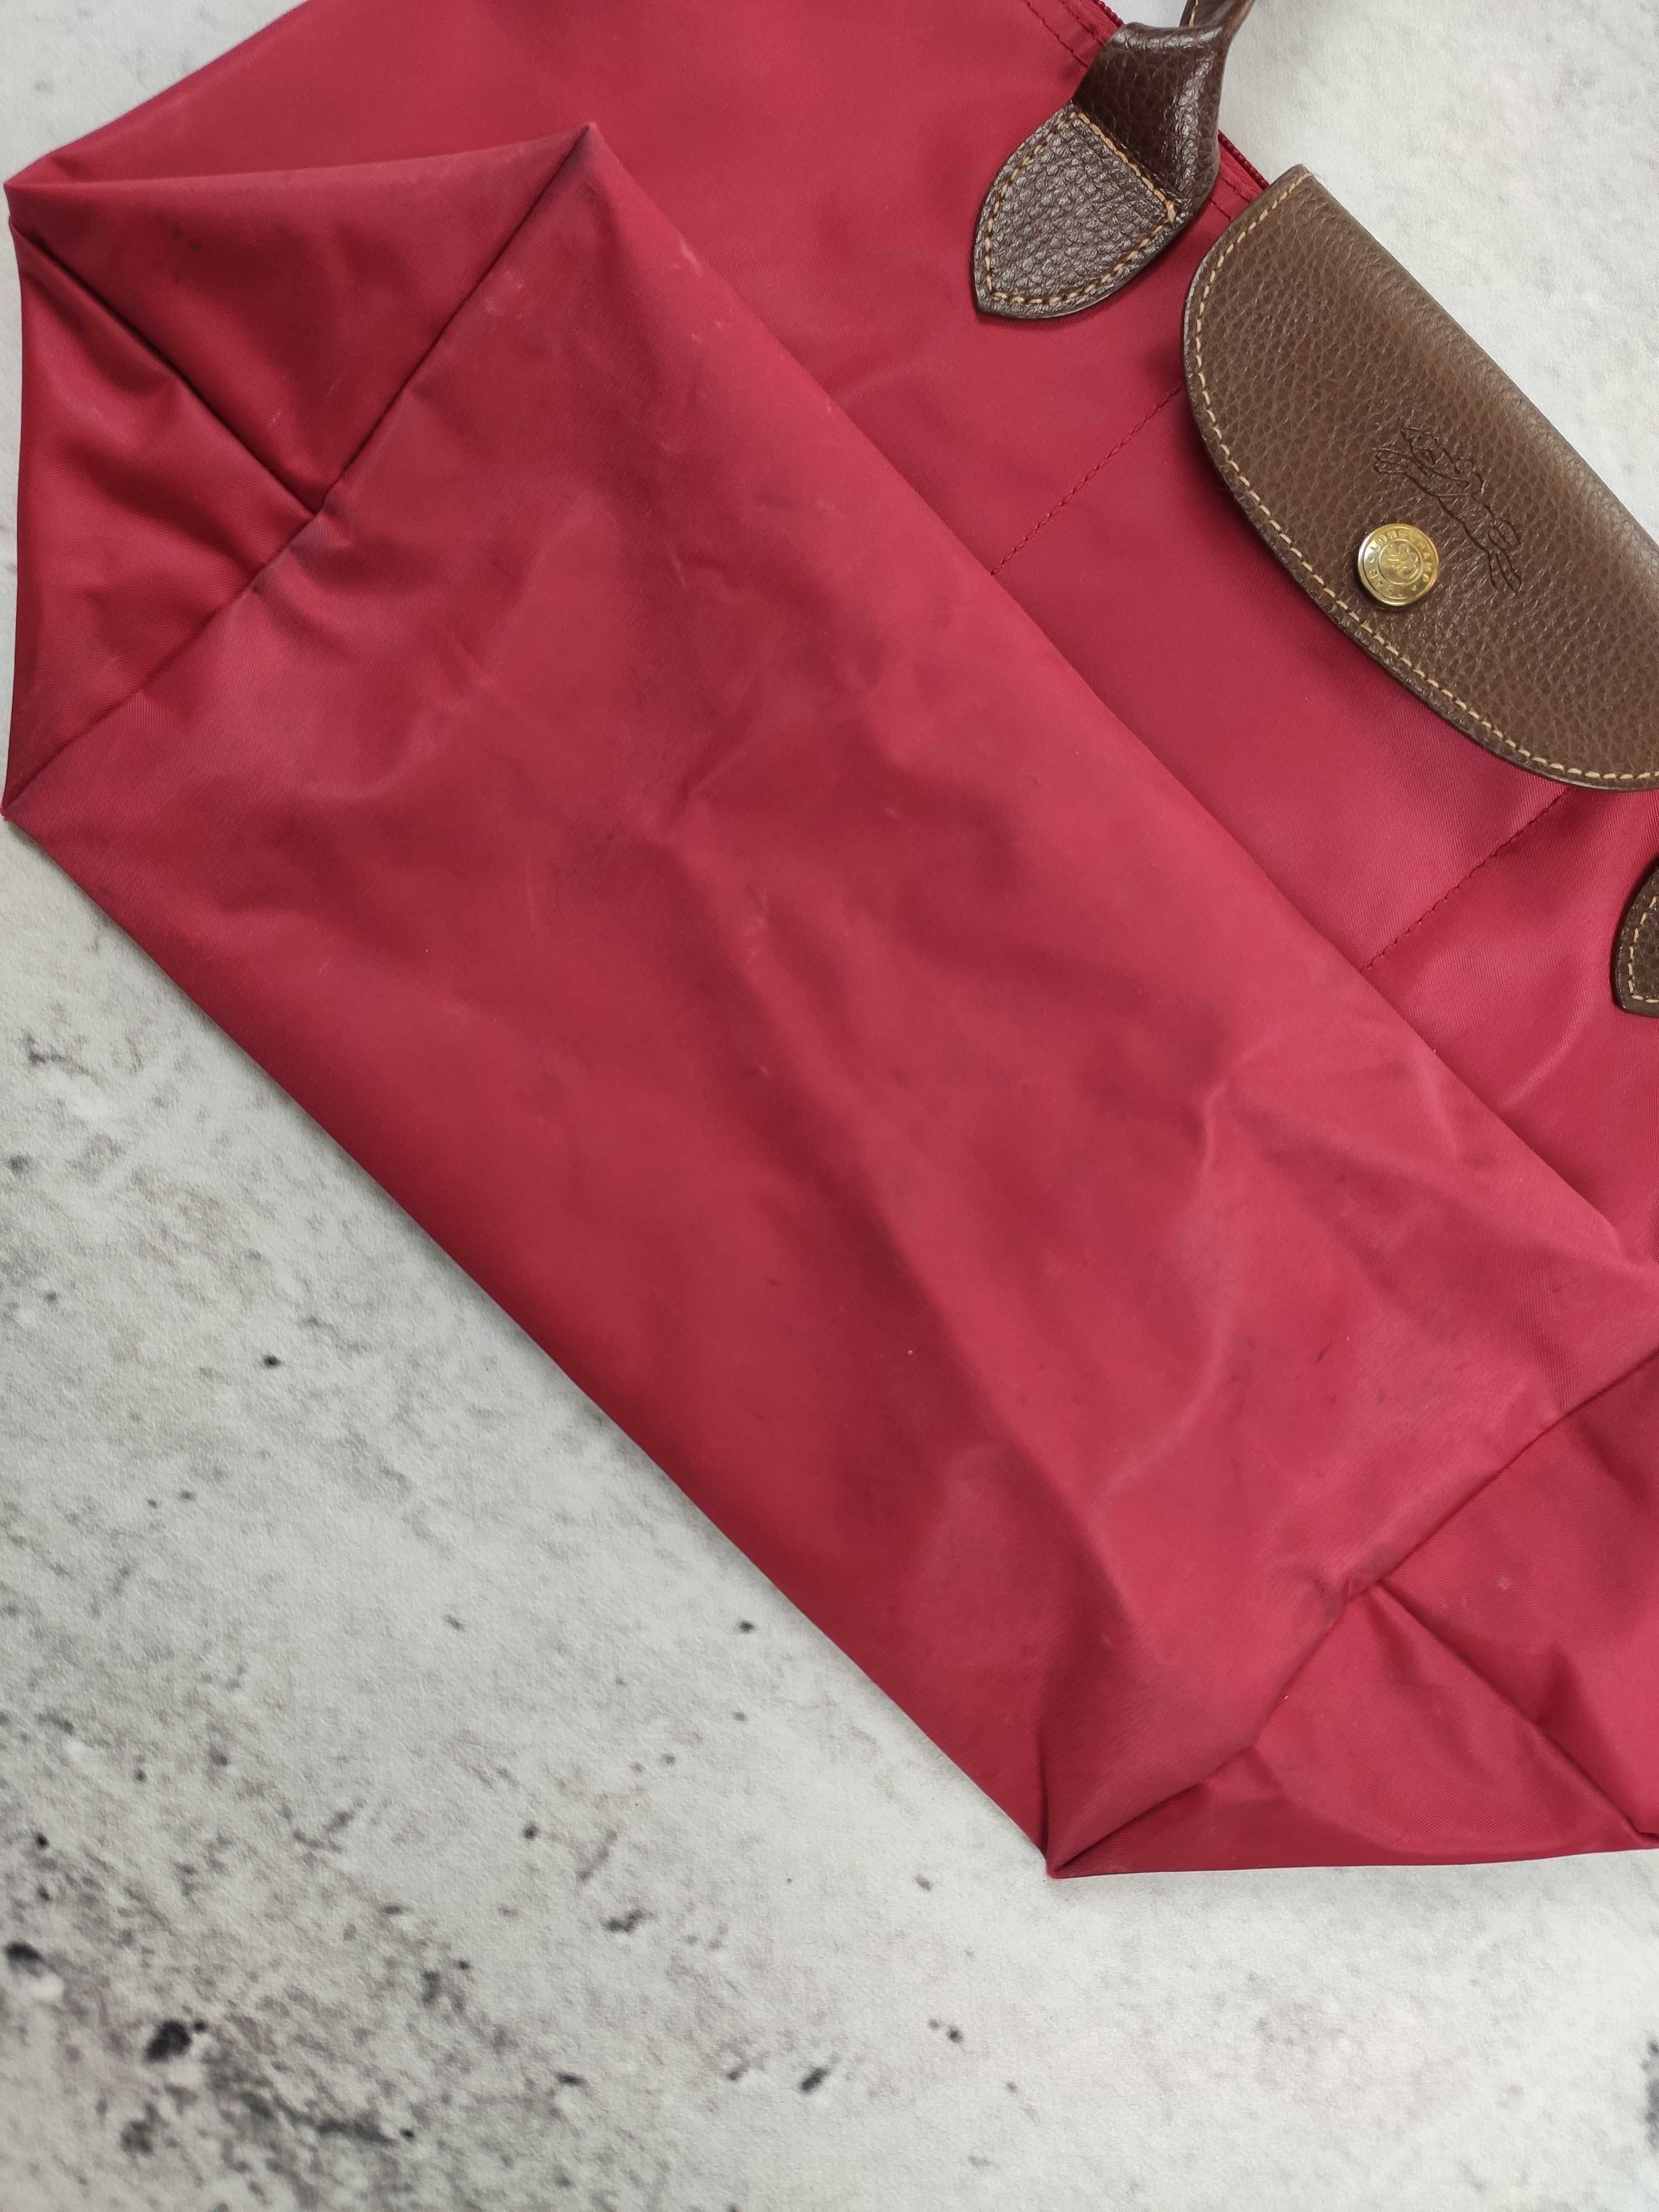 Torebka damska Longchamp Pliage czerwona elegancka